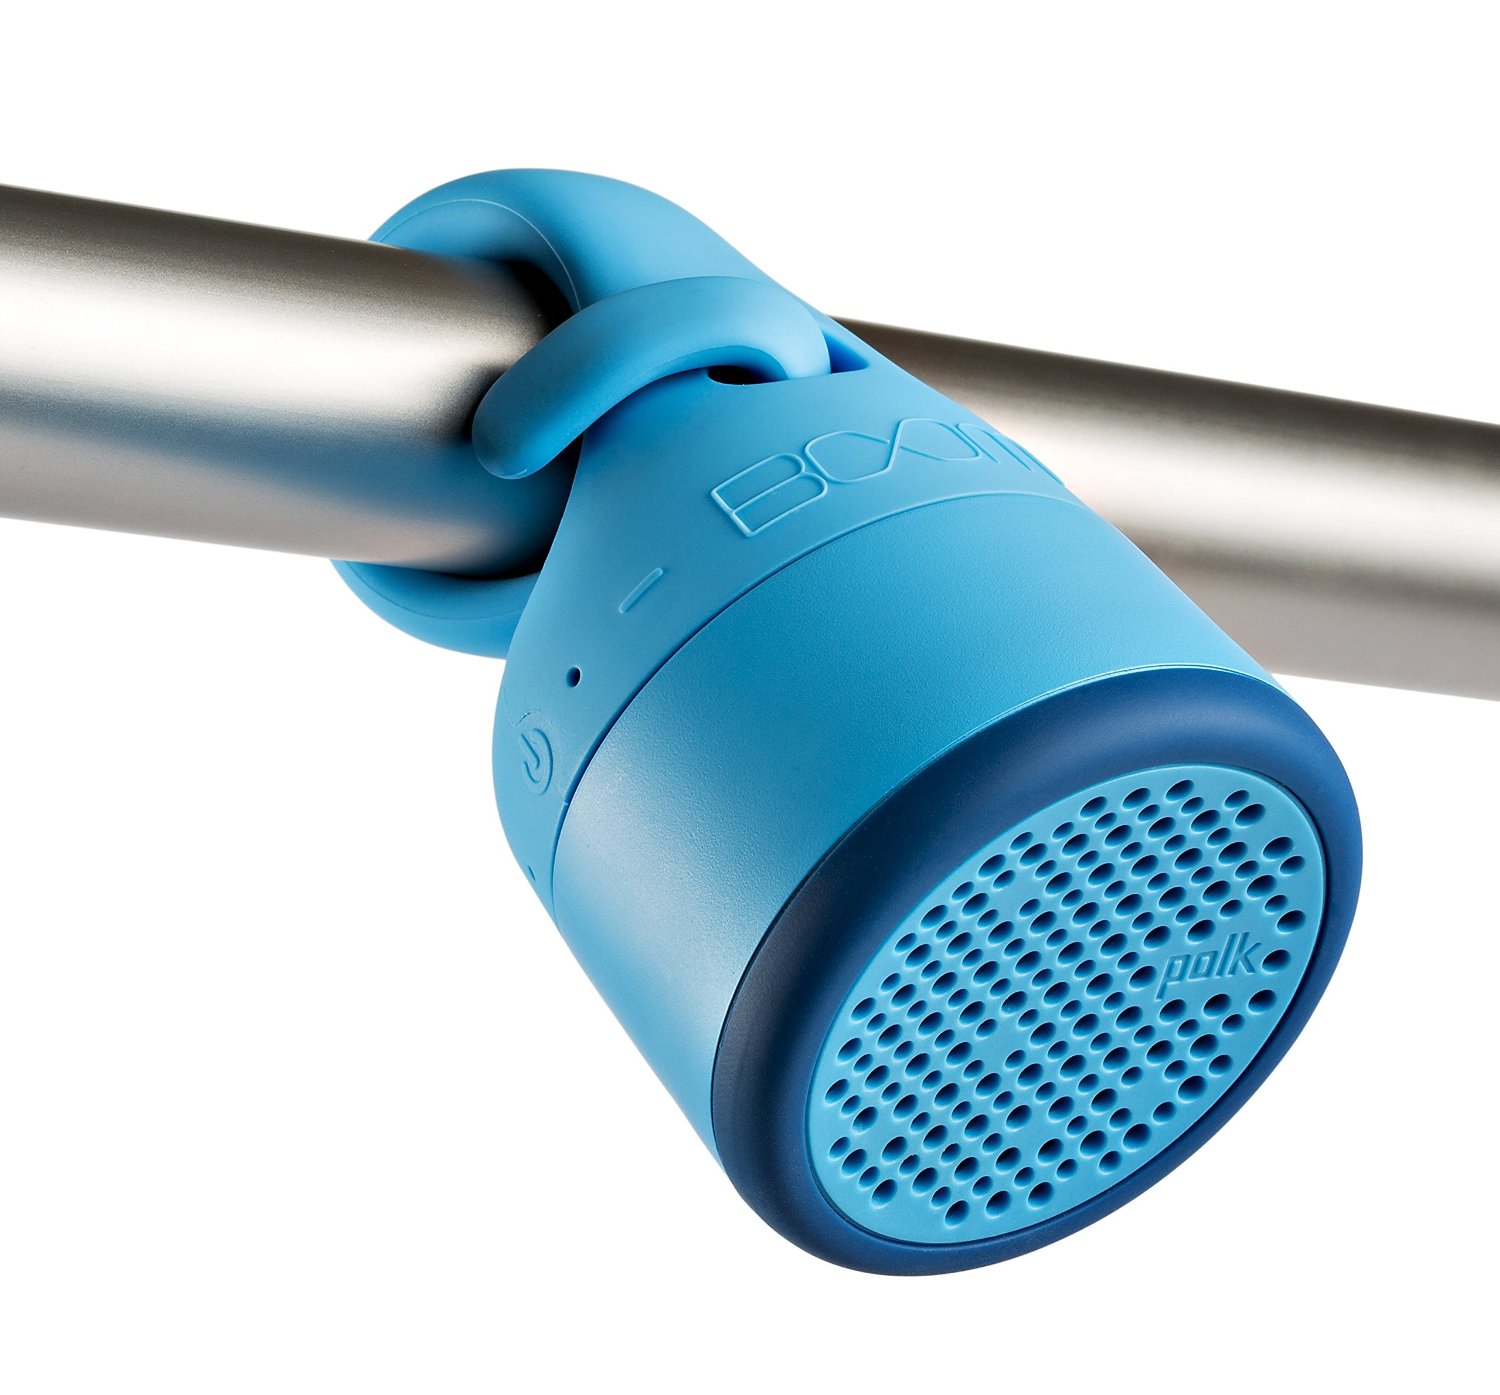 BOOM Swimmer Jr. waterproof Bluetooth speaker for $13